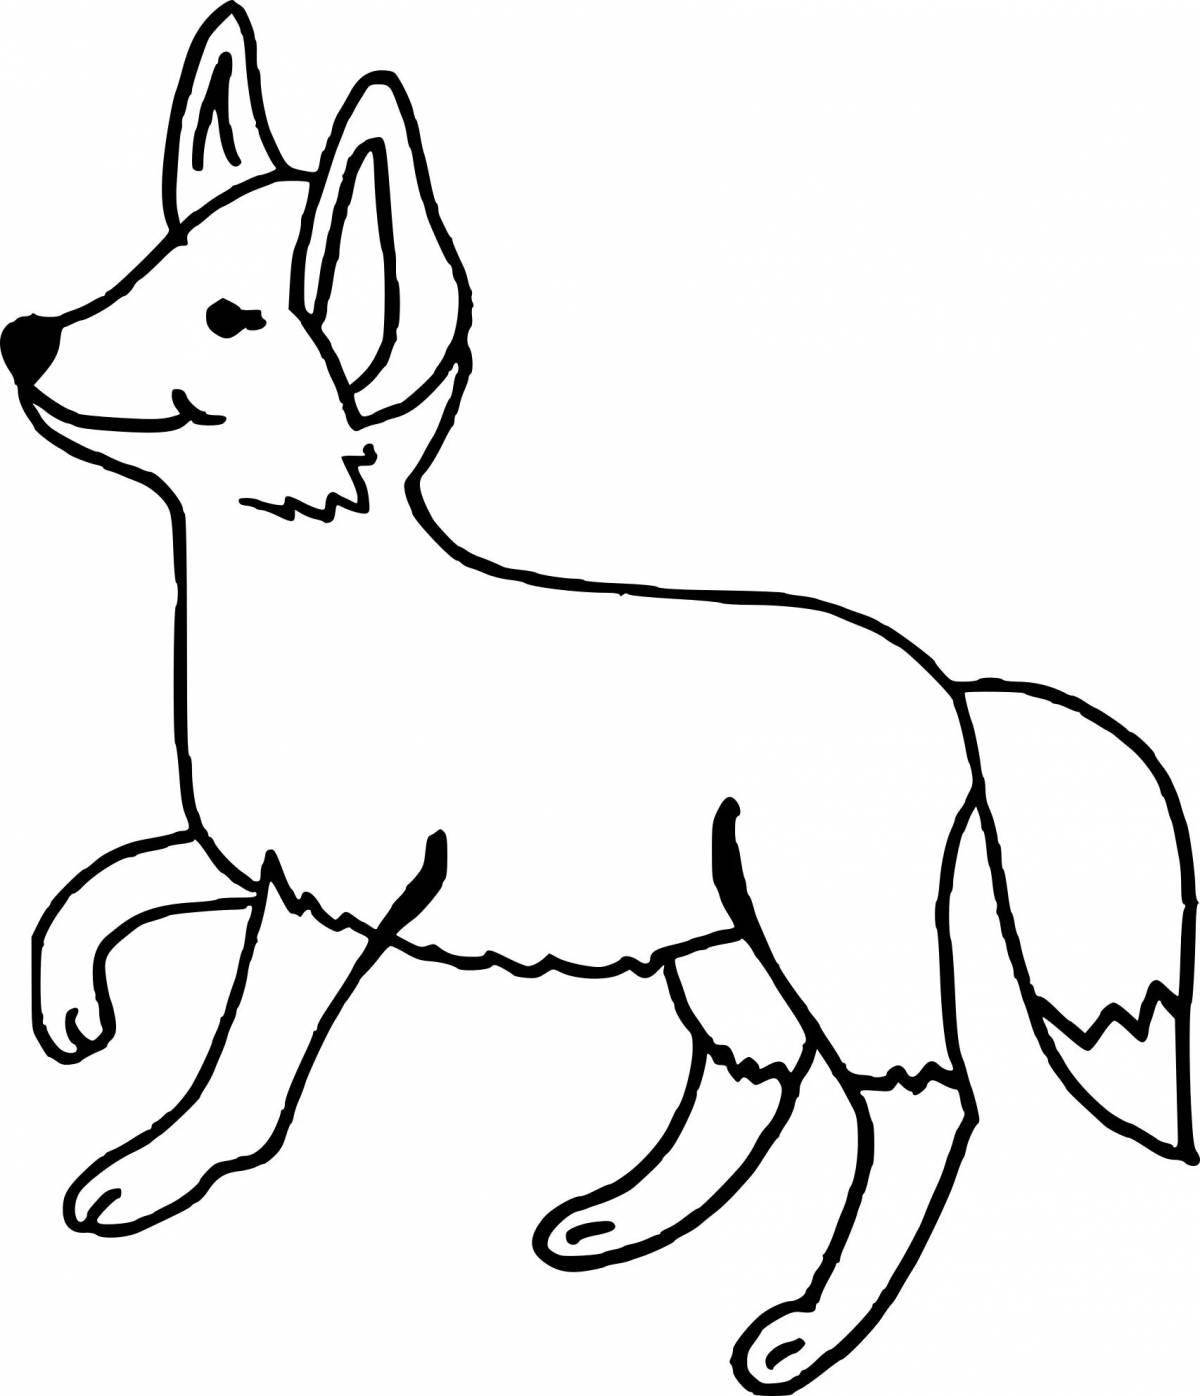 Lovely fox drawing for kids